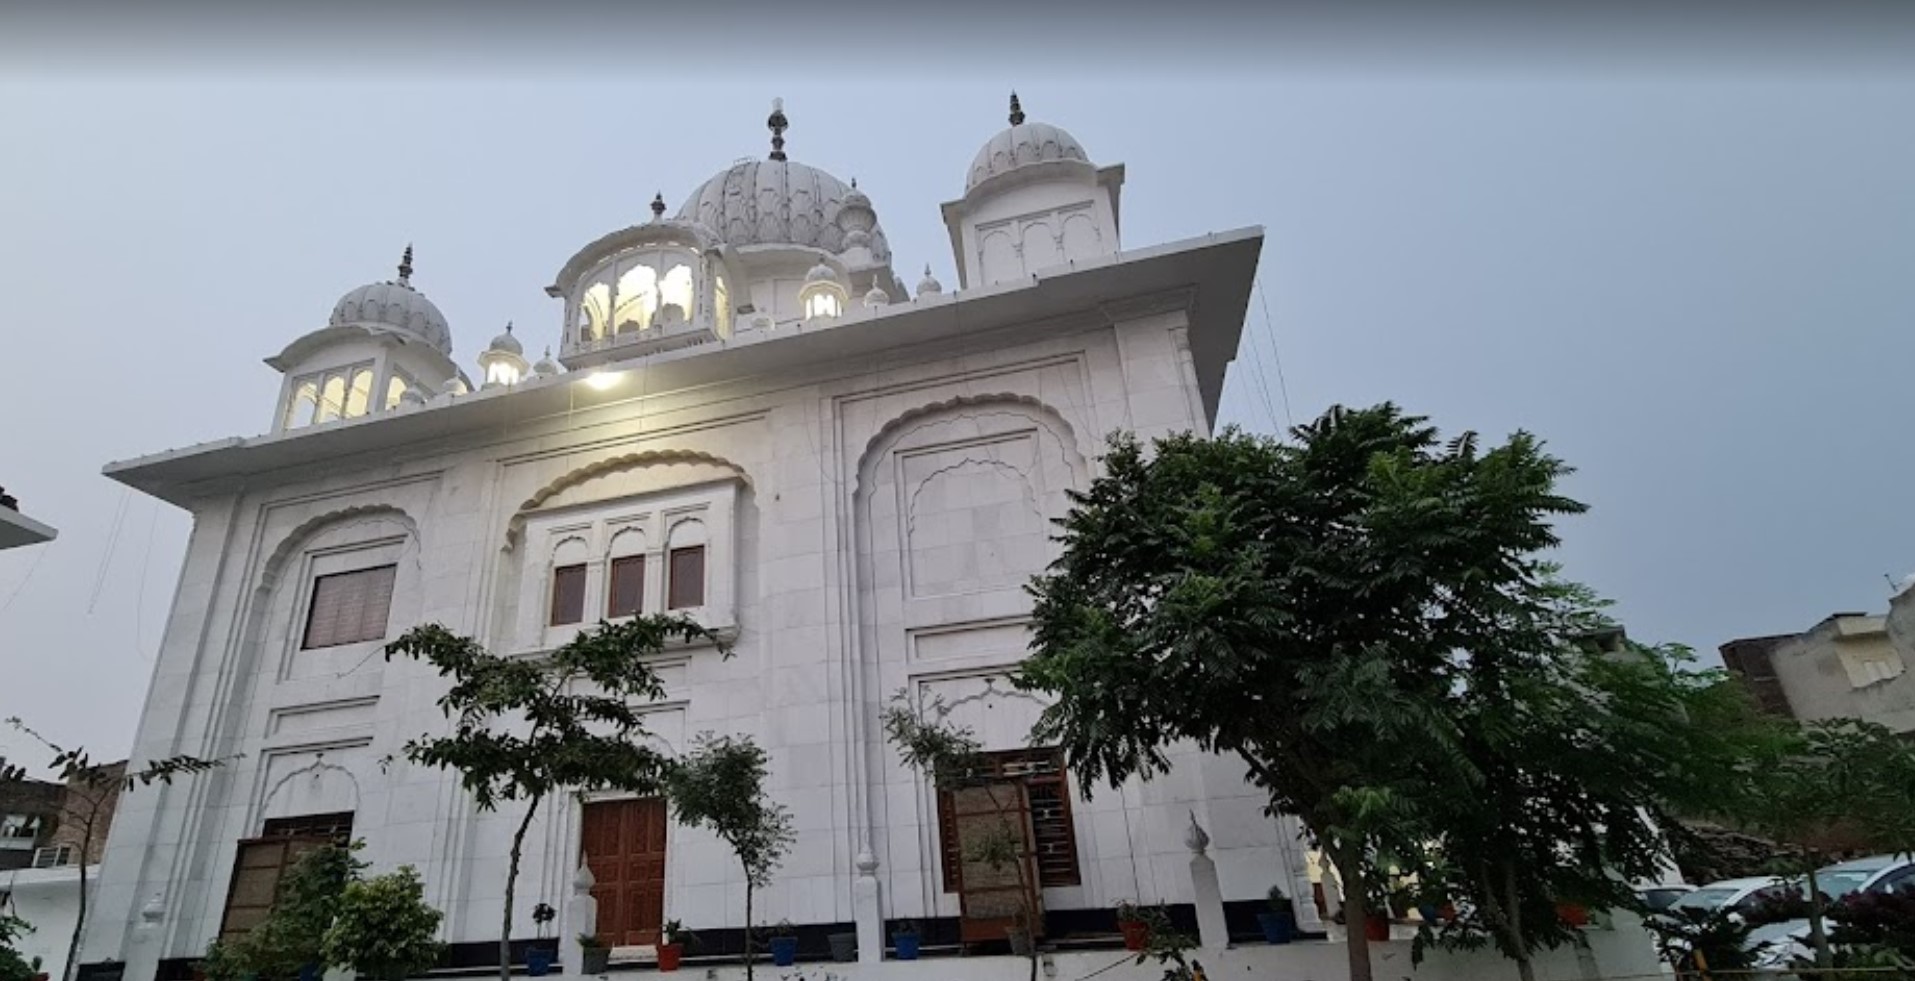 Gurdwara Pipli Sahib, Amritsar